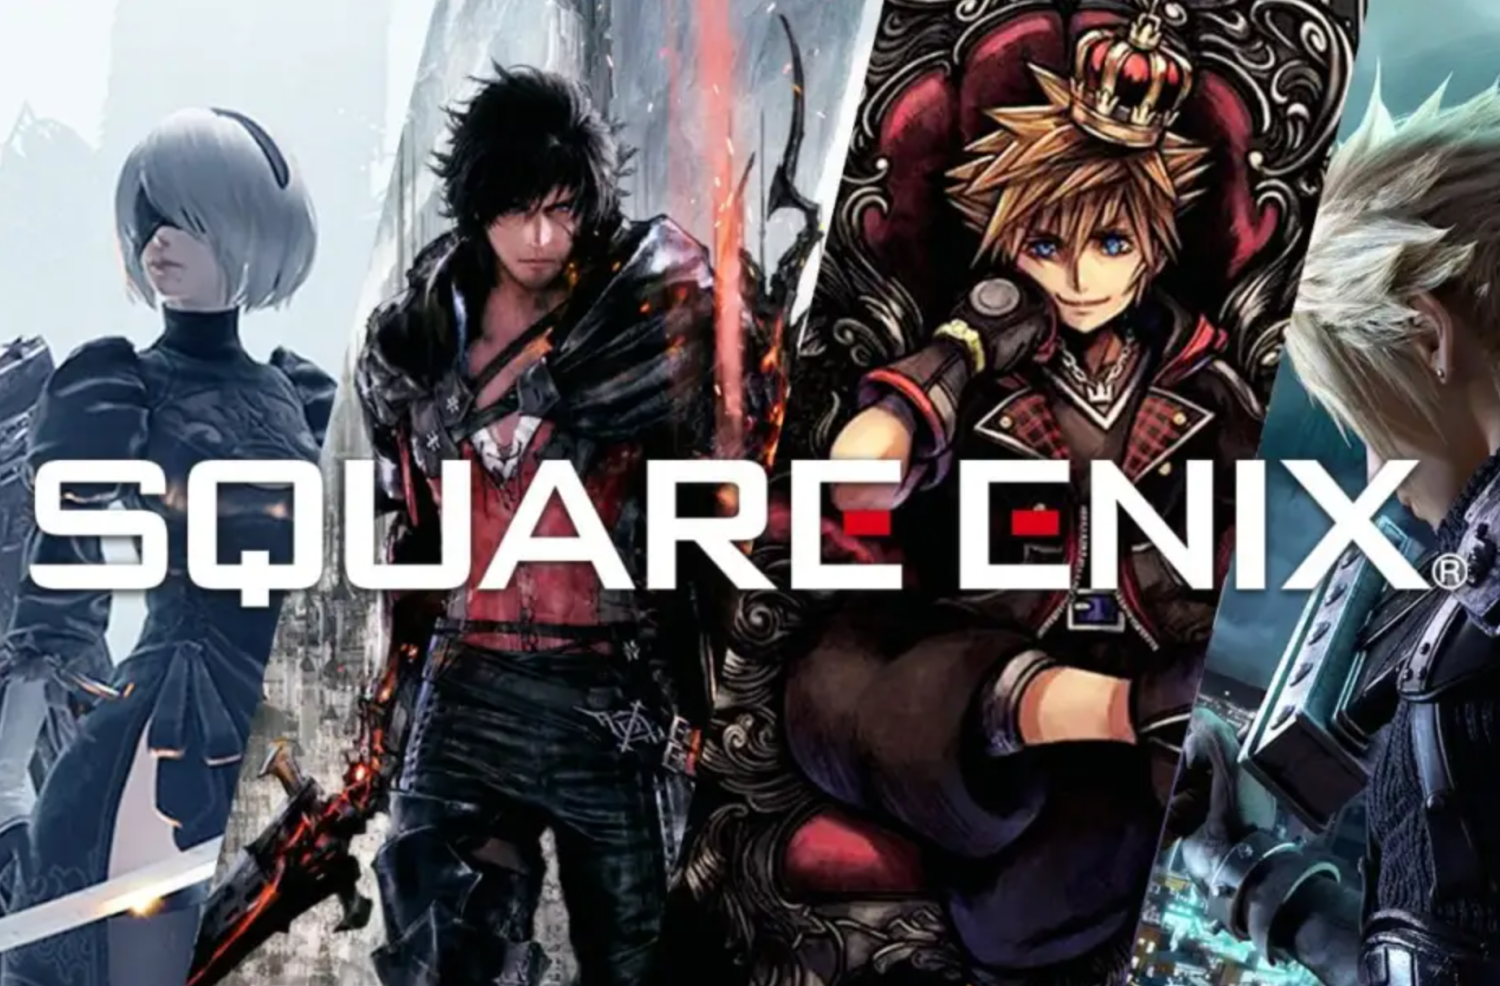 Every Square Enix Game in Development